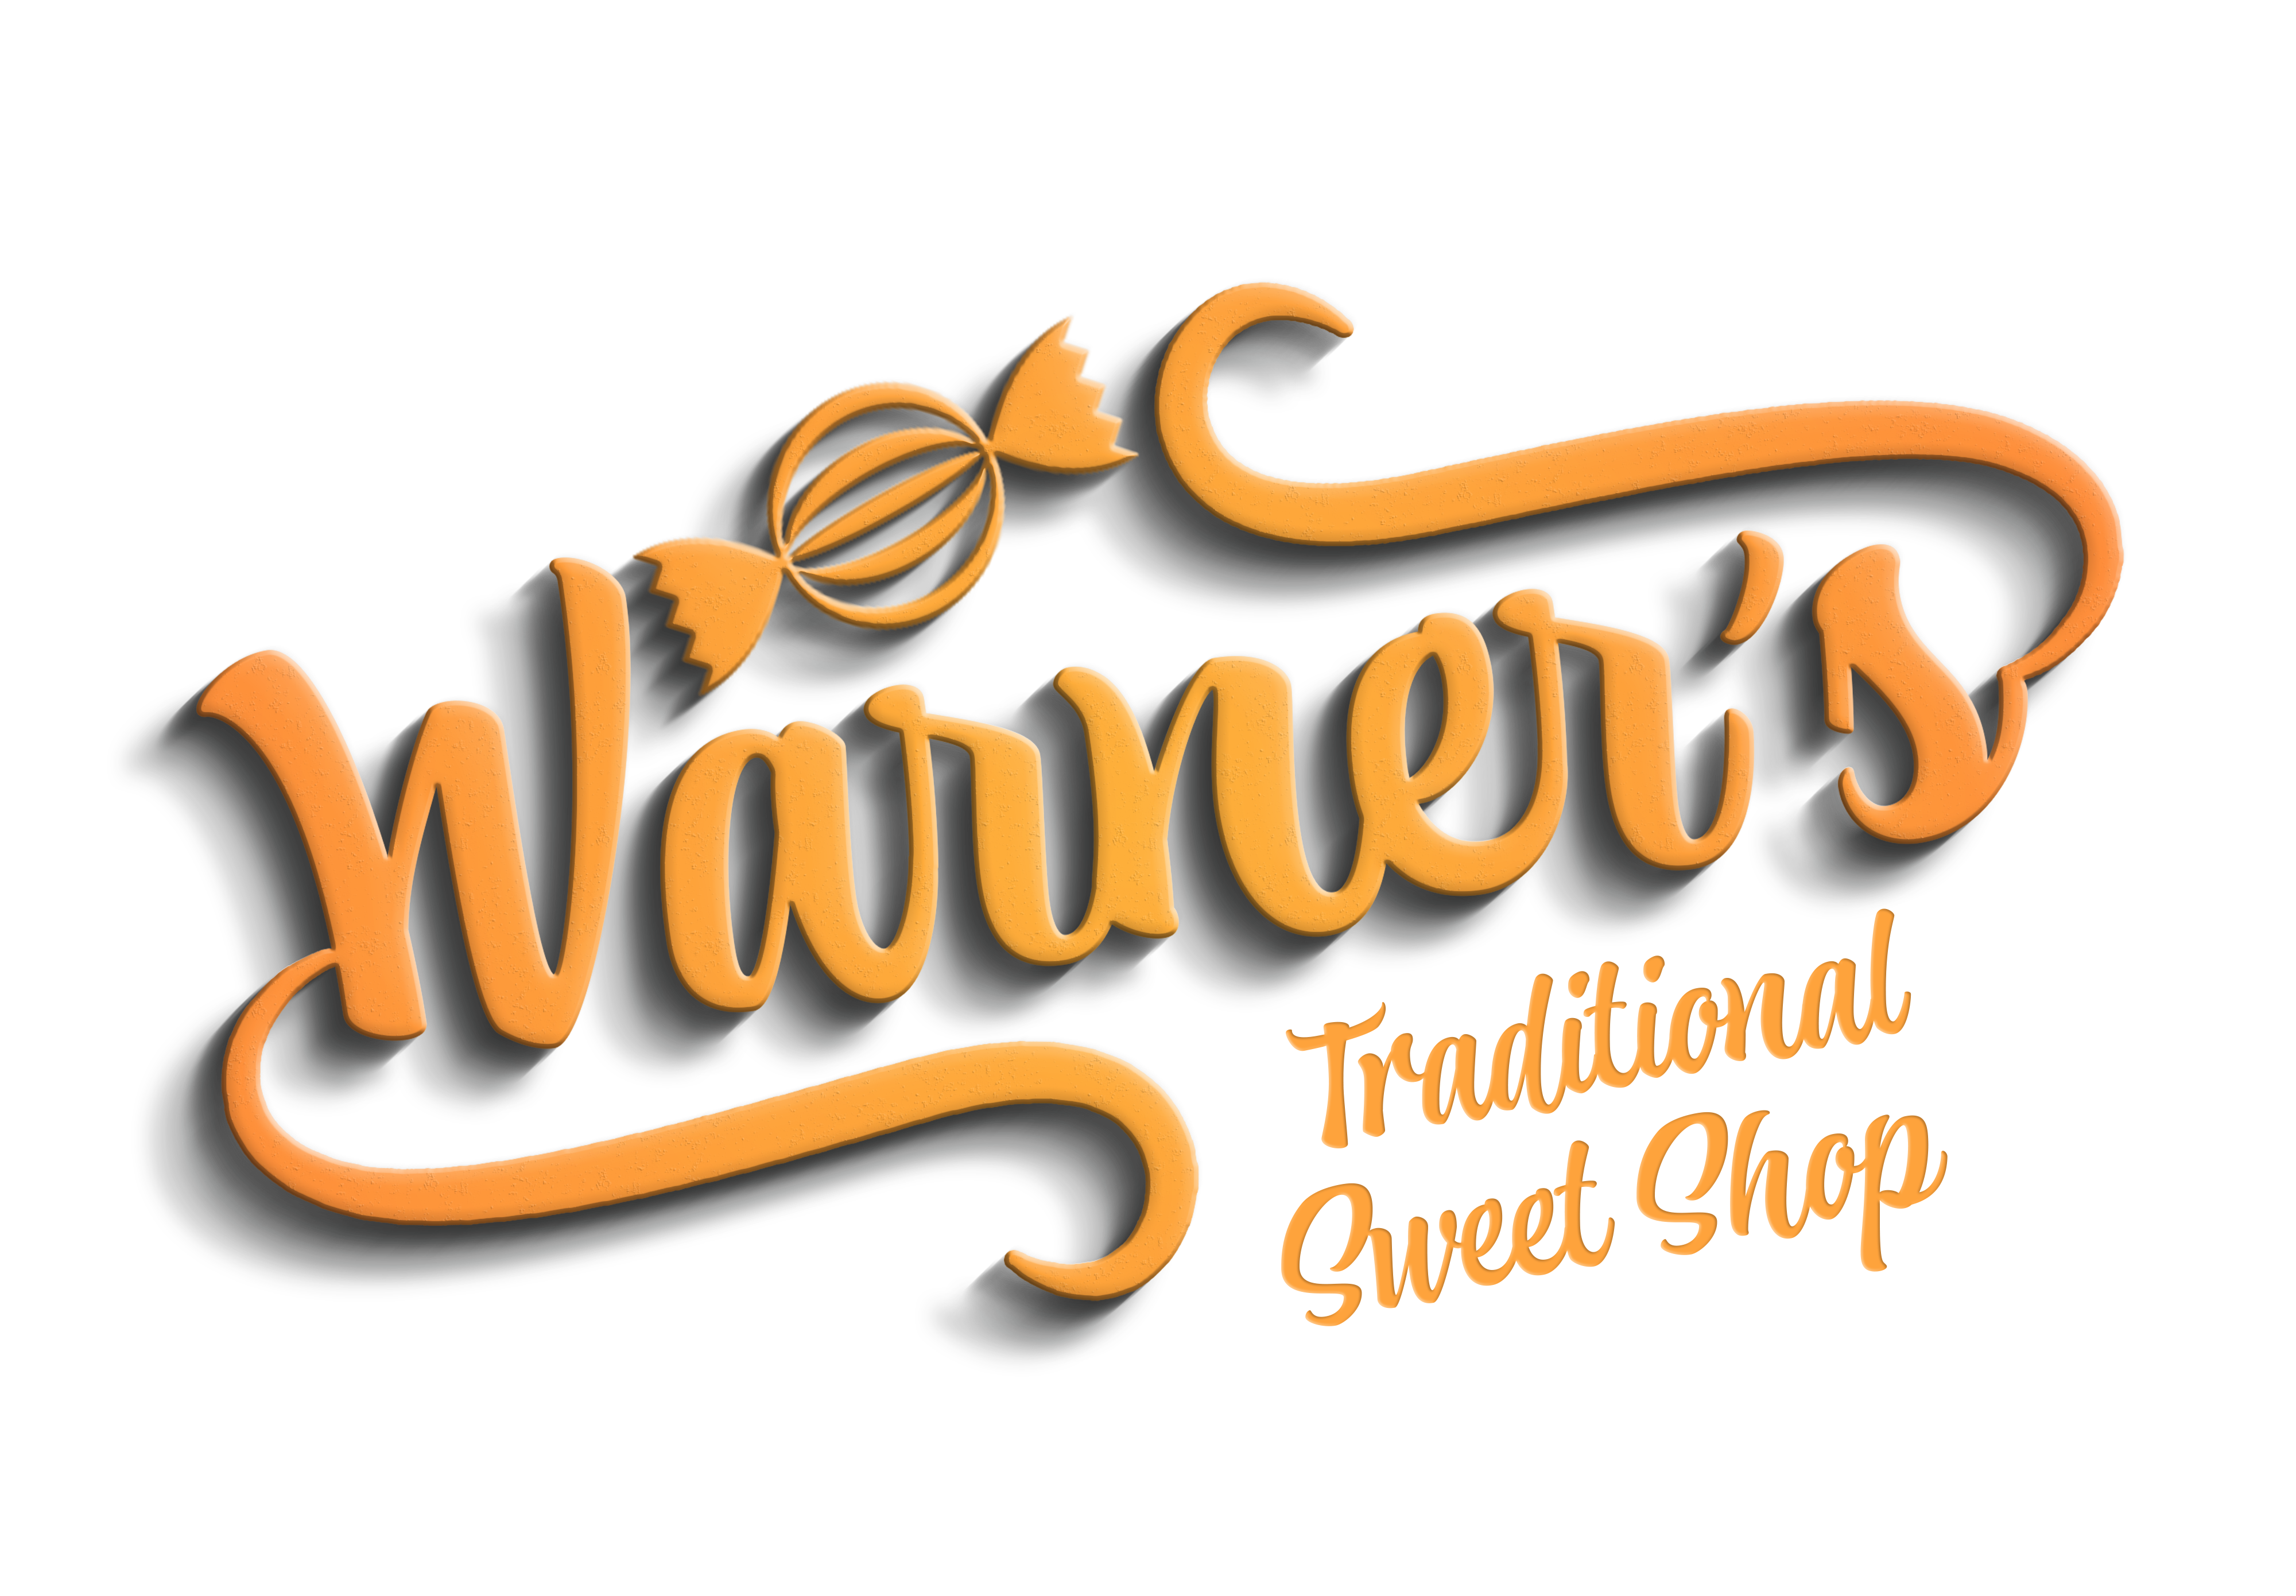 Warner's Sweets